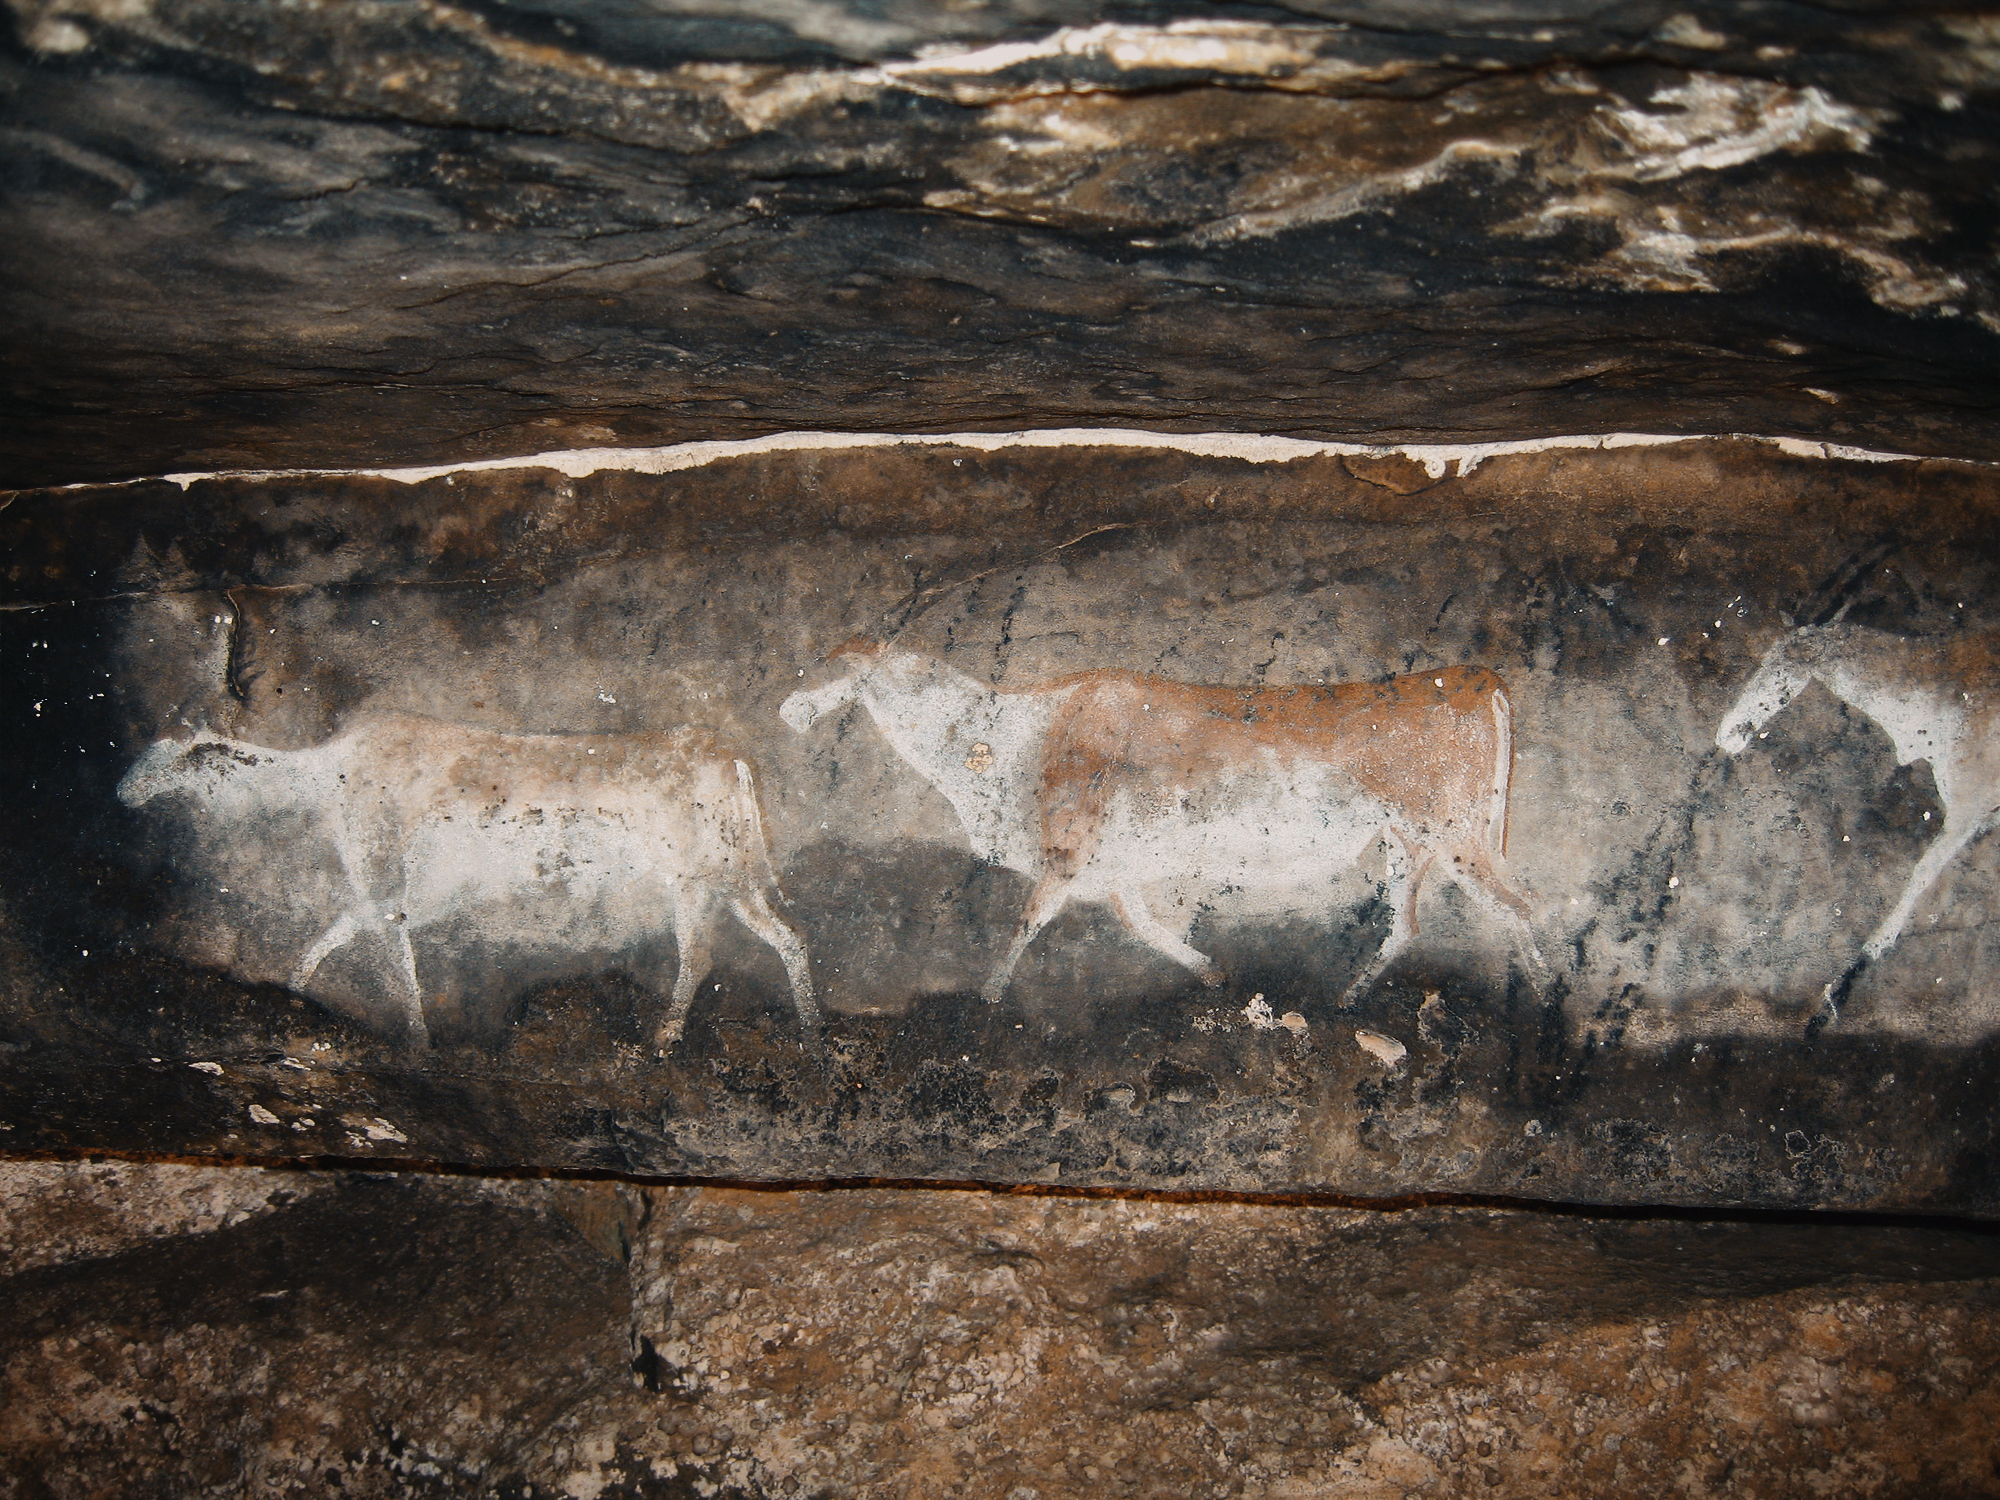 Bradshaw Foundation San Bushmen Rock Art Paintings Africa African Shamans Shaman religious spirit world journeys